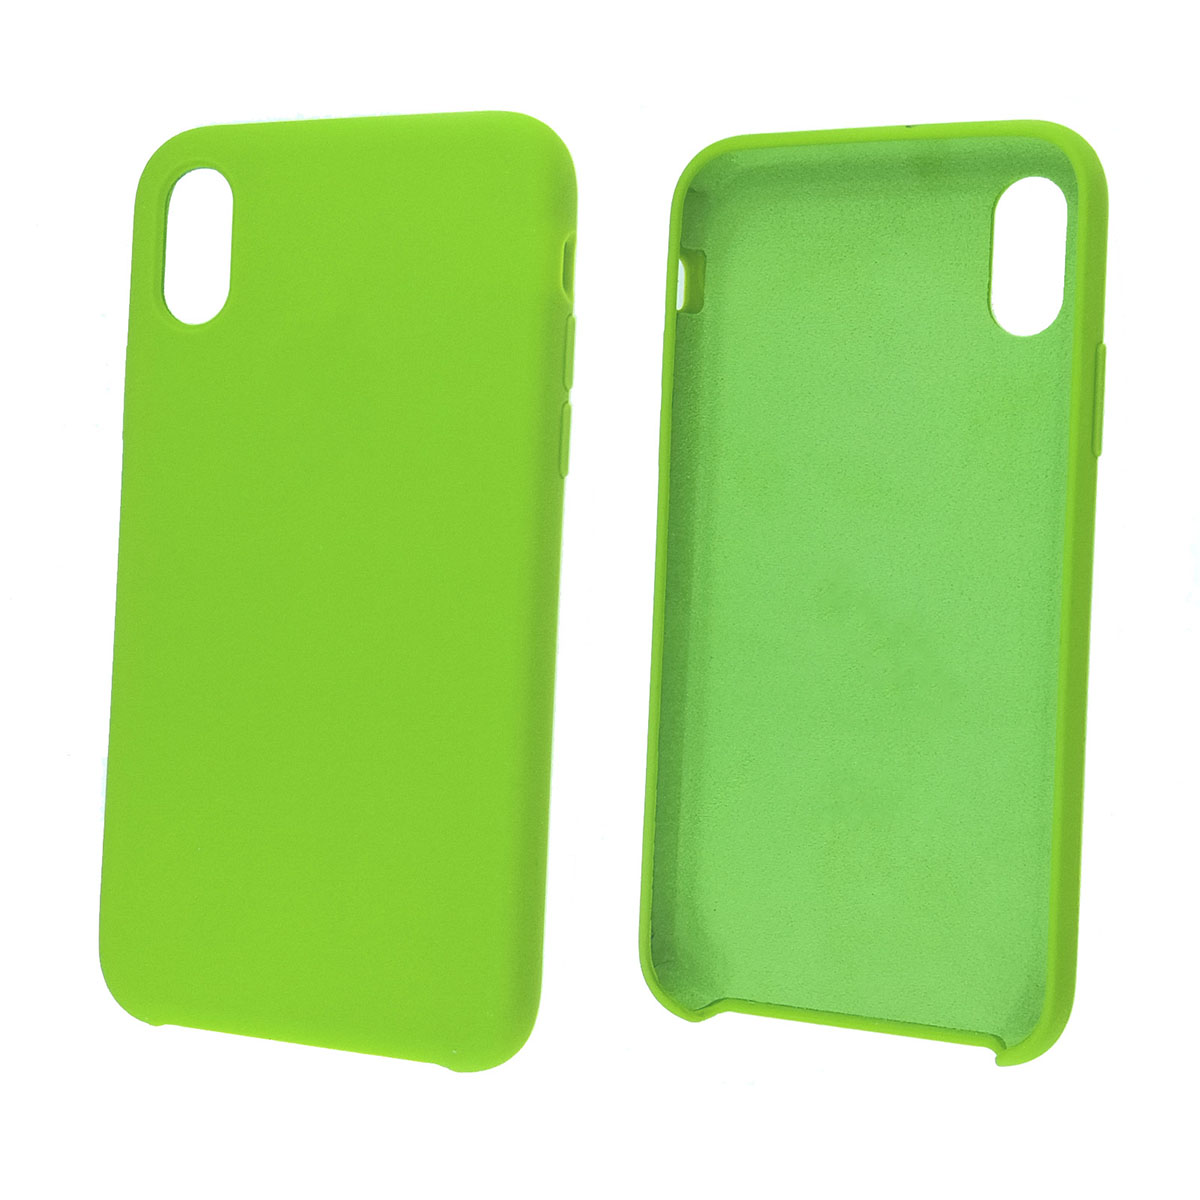 Чехол накладка Silicon Case для APPLE iPhone XS, силикон, бархат, цвет светло зеленый.